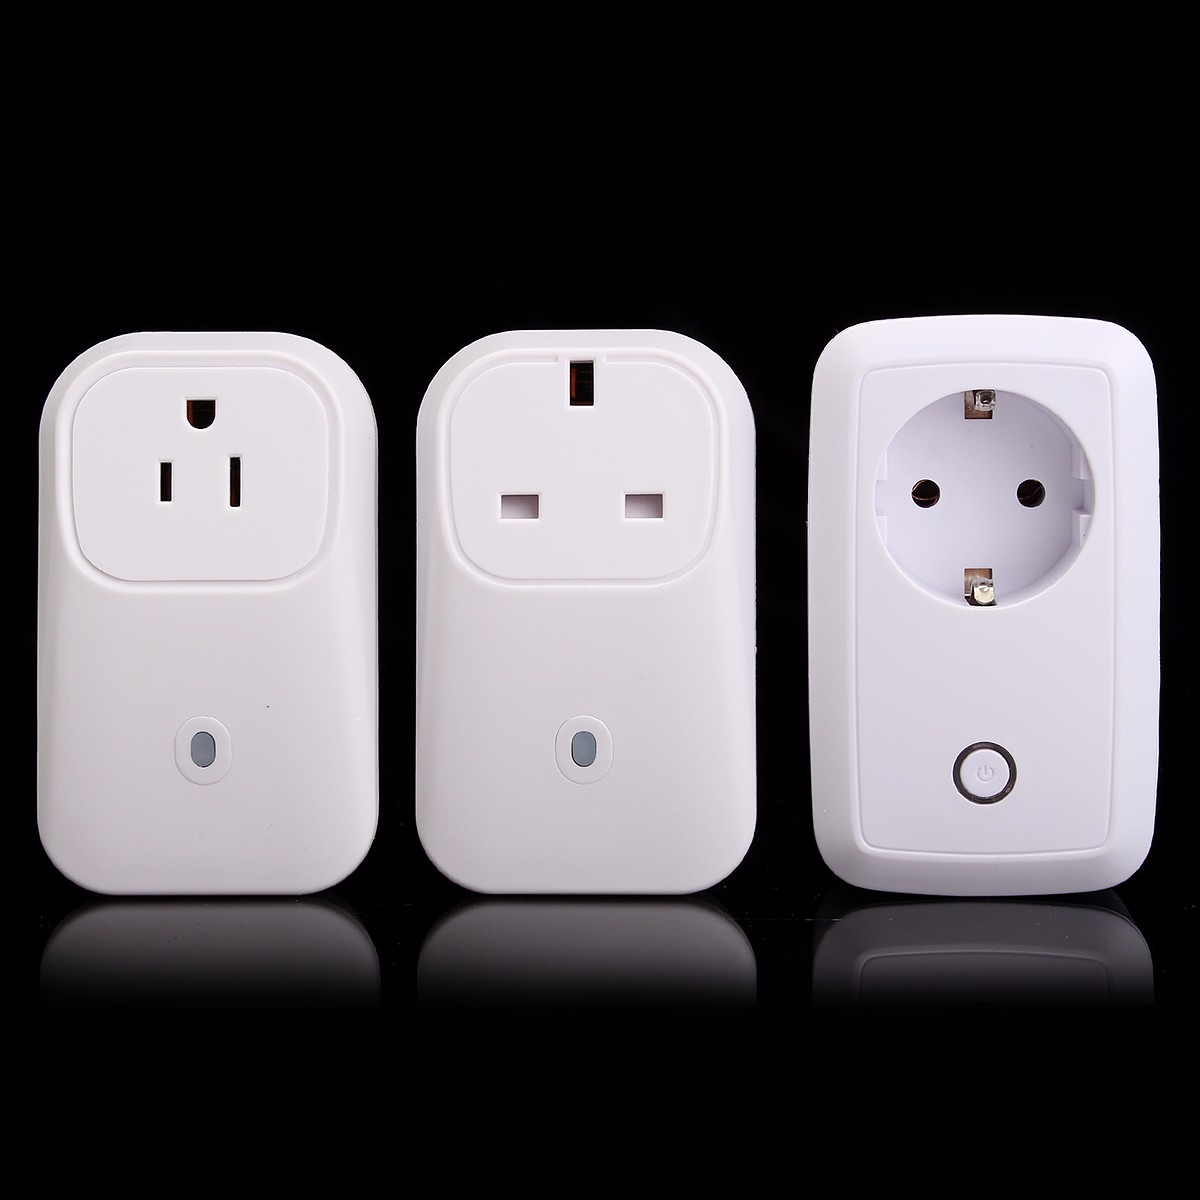 WiFi-Smart-Socket-Charger-Wireless-Remote-Control-Socket-Plug-Adapter-US-EU-UK-Wall-Plug-for-Smart-P-1123467-8